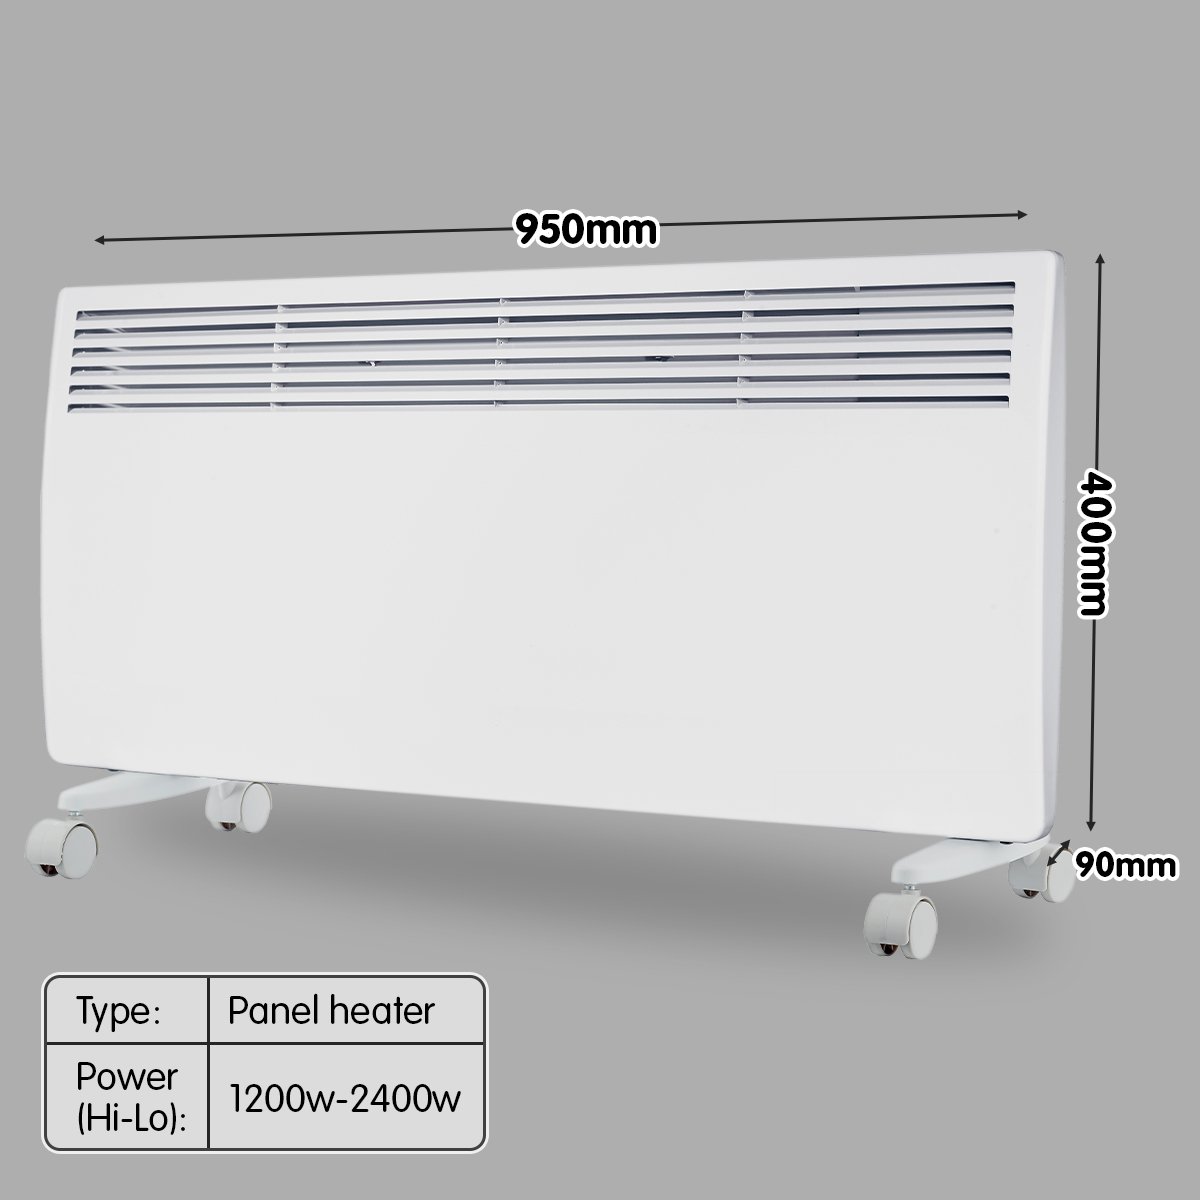 homewares Dm-24wt 2400w electric panel heater